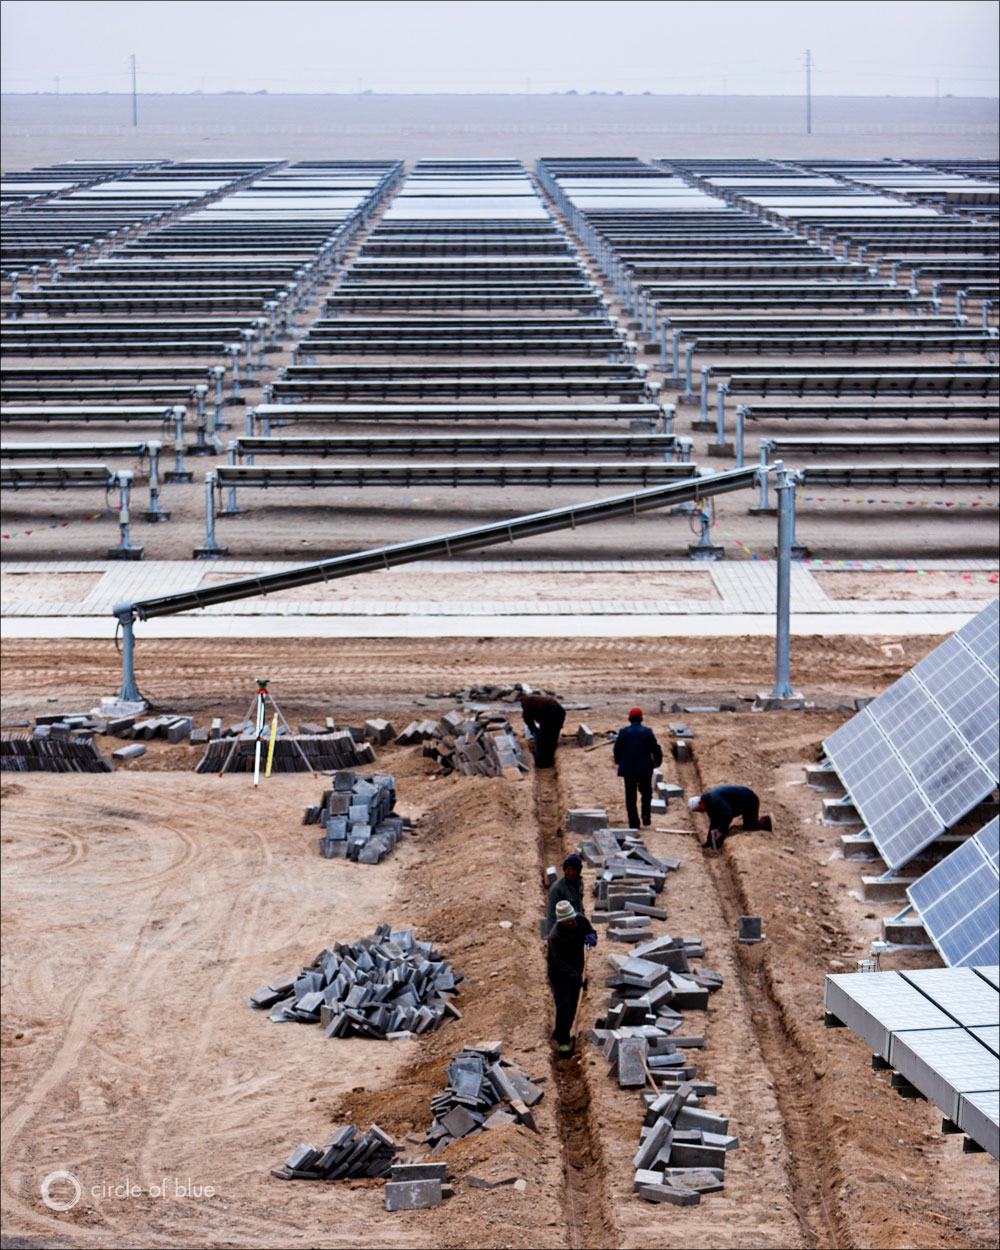 China Water Energy Solar Power Renewable Industry Economy